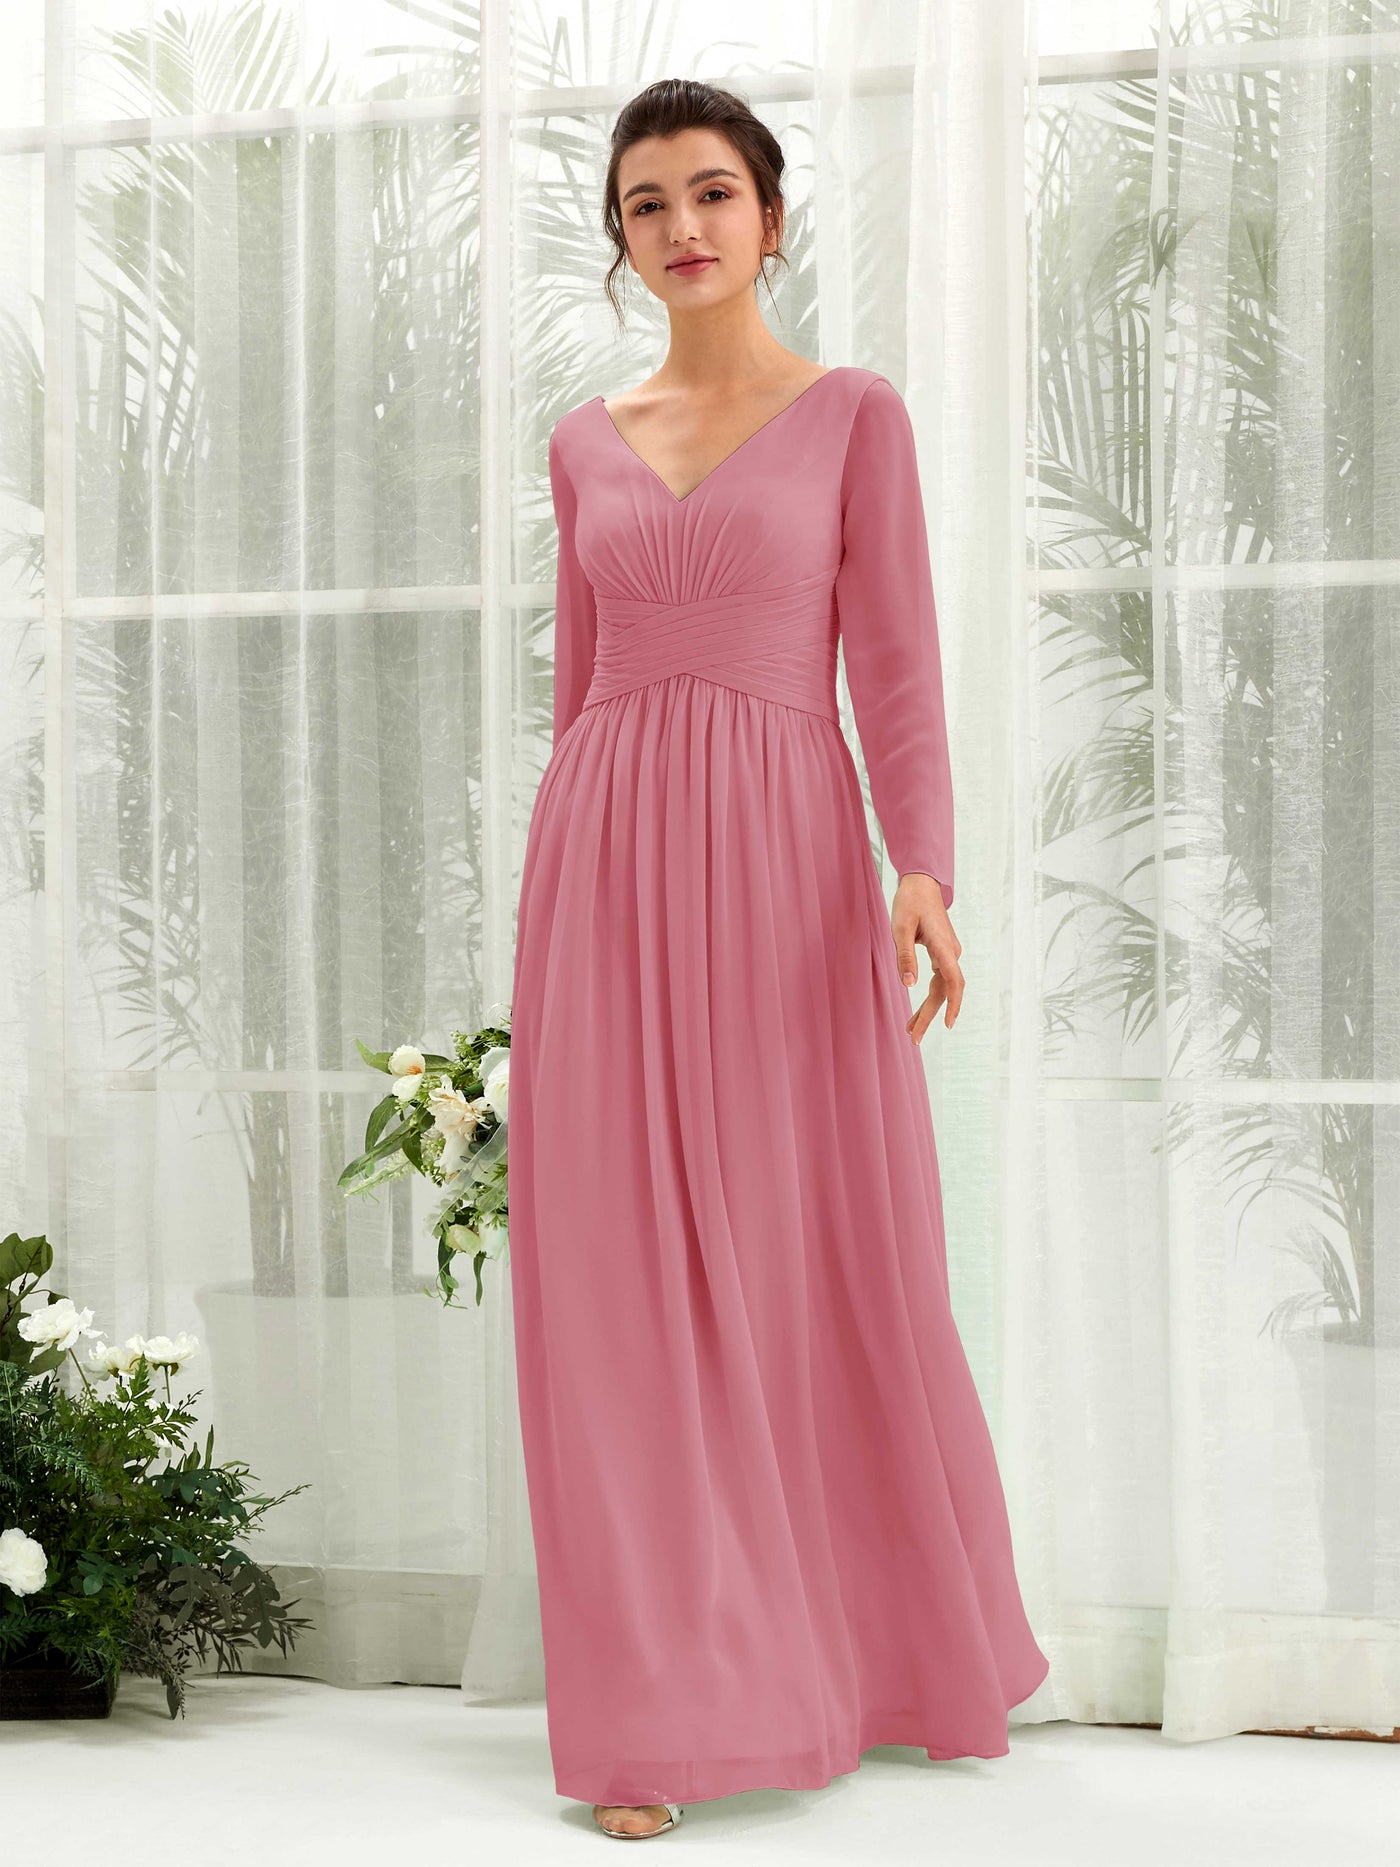 Desert Rose Bridesmaid Dresses Bridesmaid Dress A-line Chiffon V-neck Full Length Long Sleeves Wedding Party Dress (81220311)#color_desert-rose